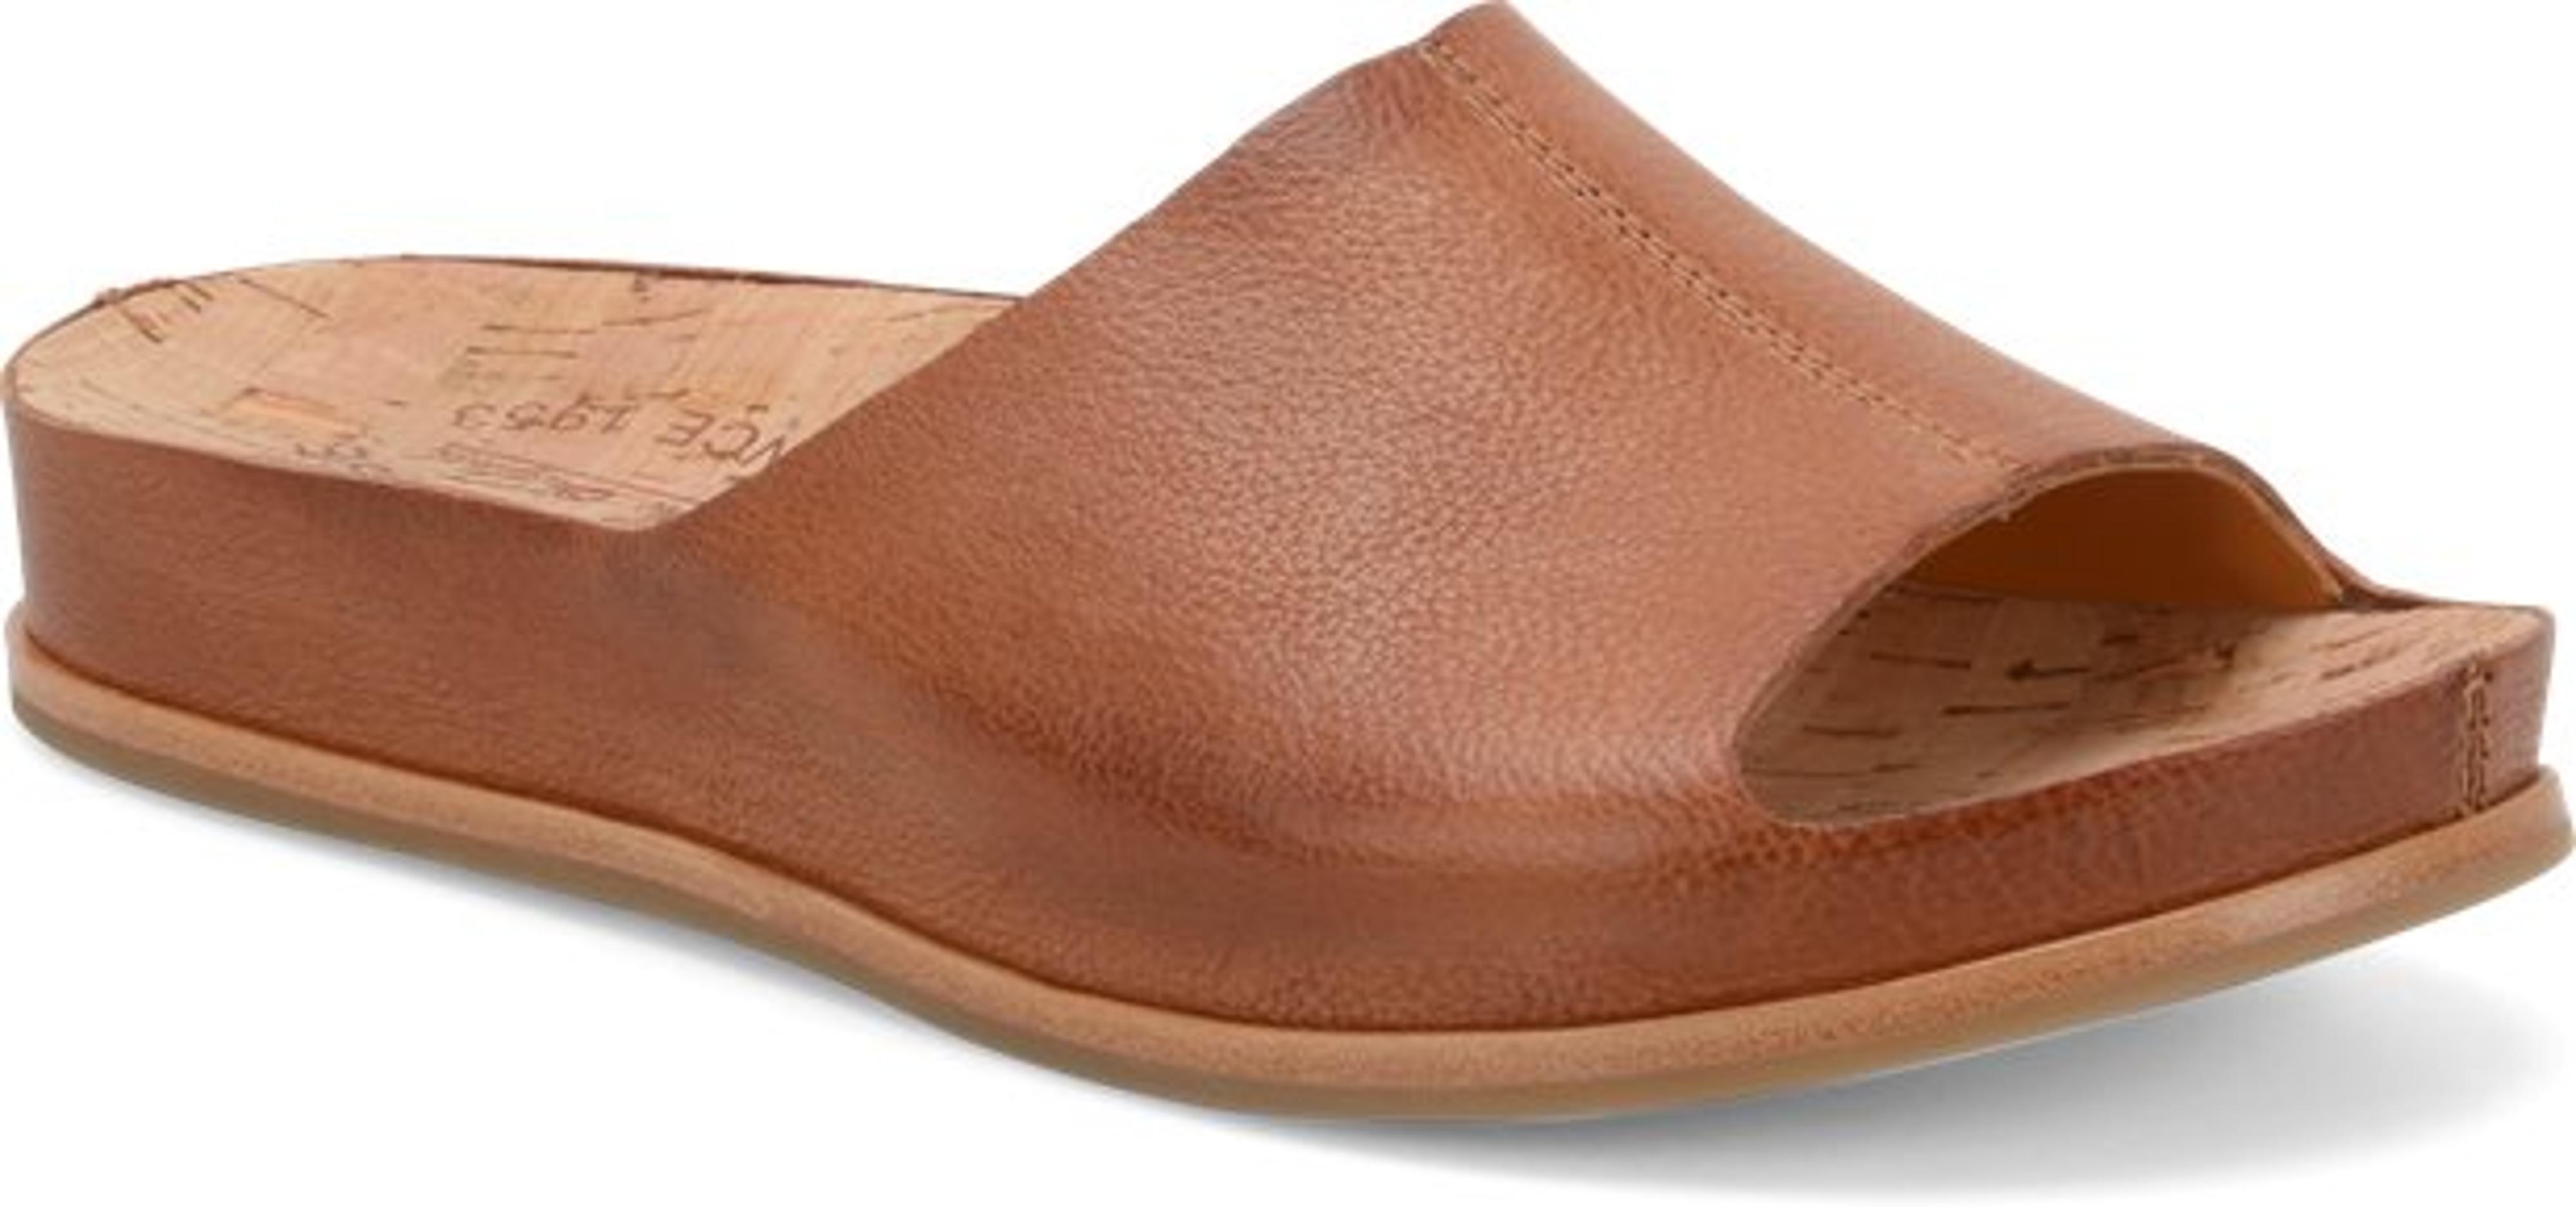  Tutsi Slide Sandals